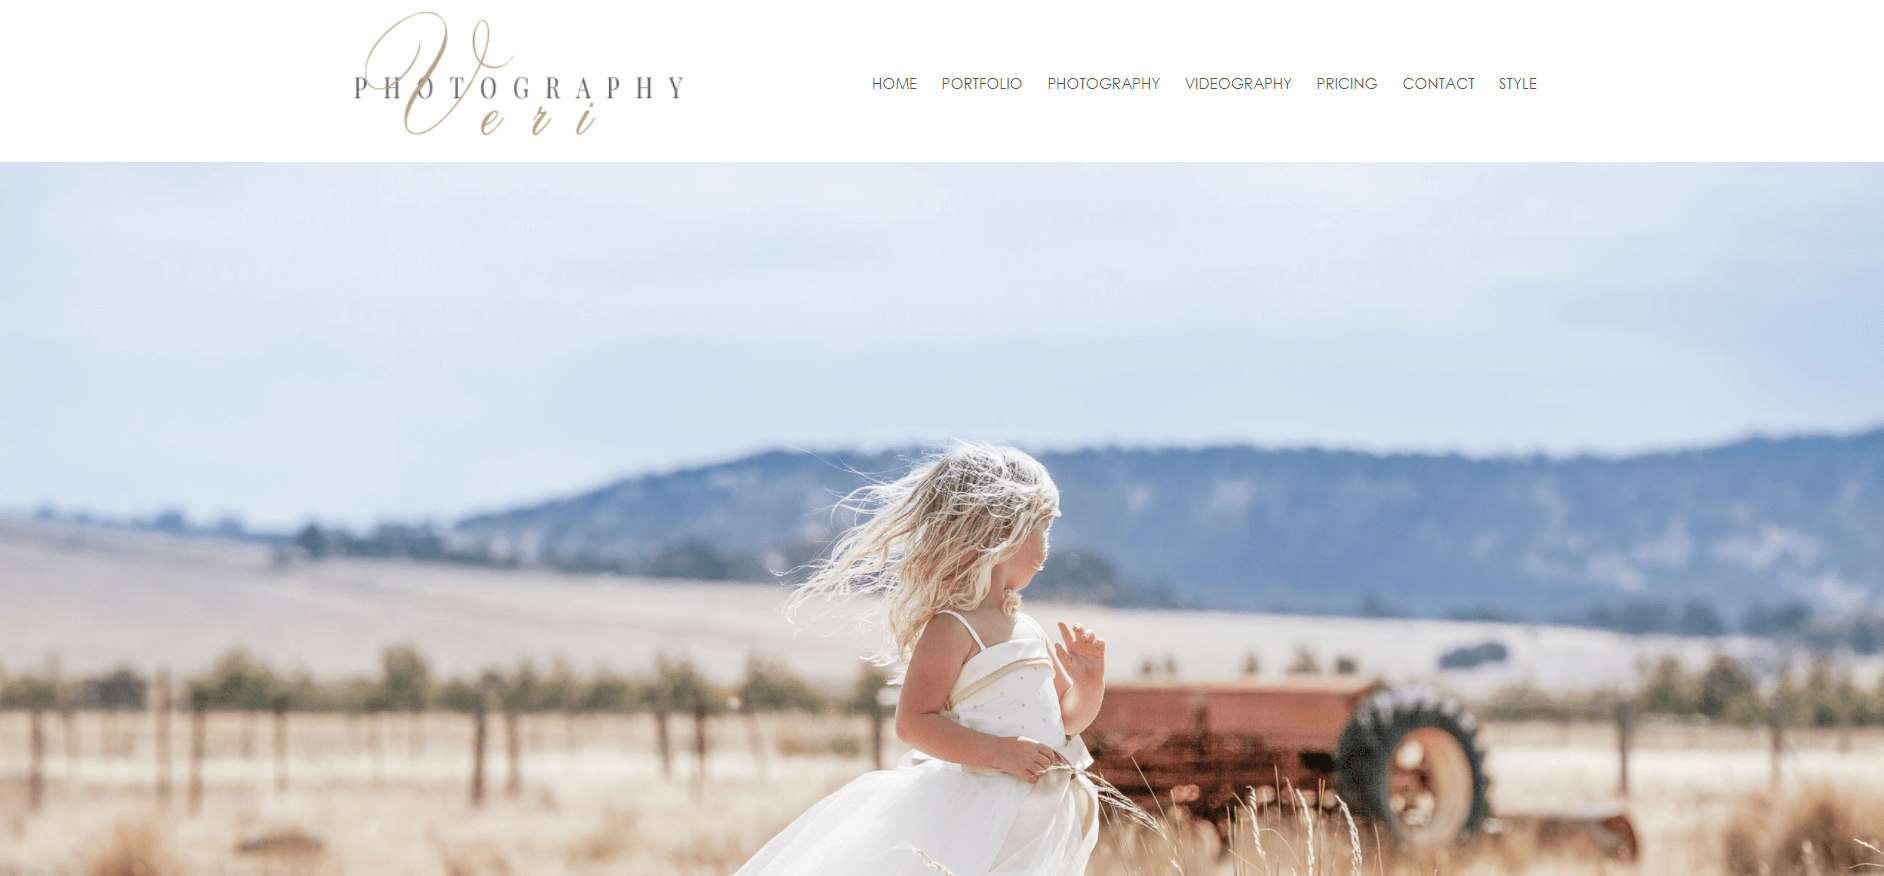 Top 30 Wedding Photographers Yarra Valley [2021] 